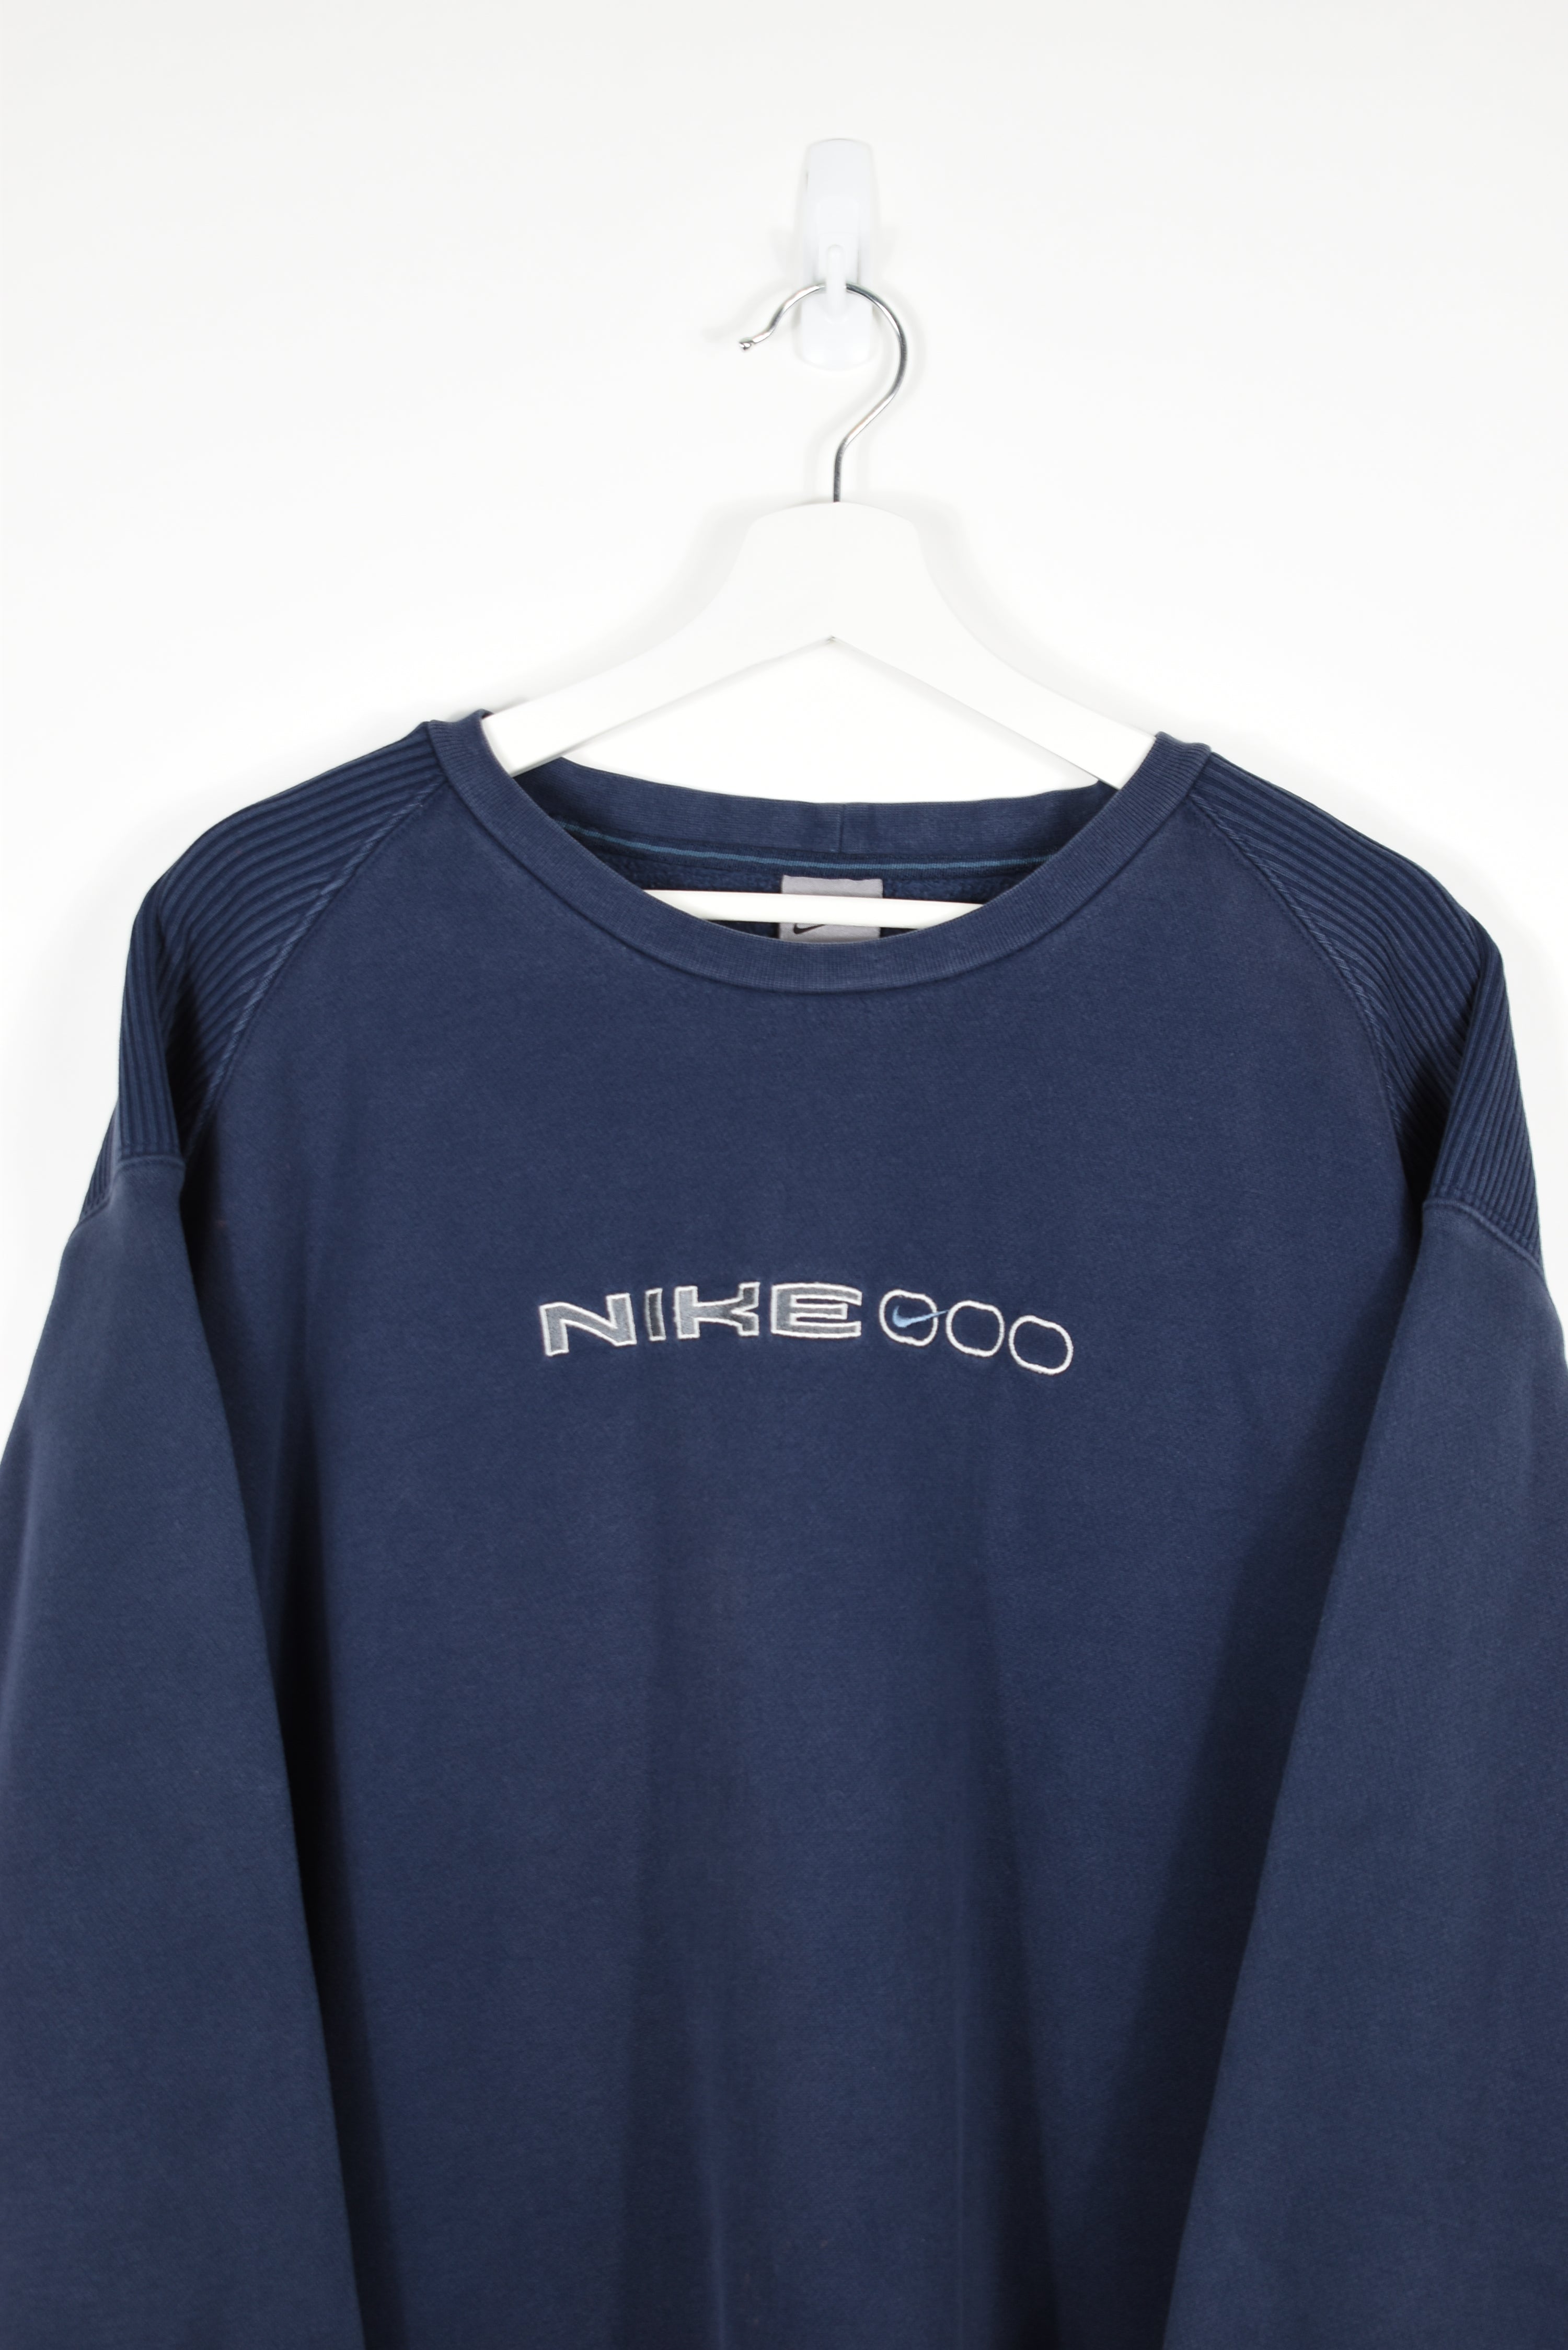 Vintage Nike Spellout Embroidered Sweatshirt XXL